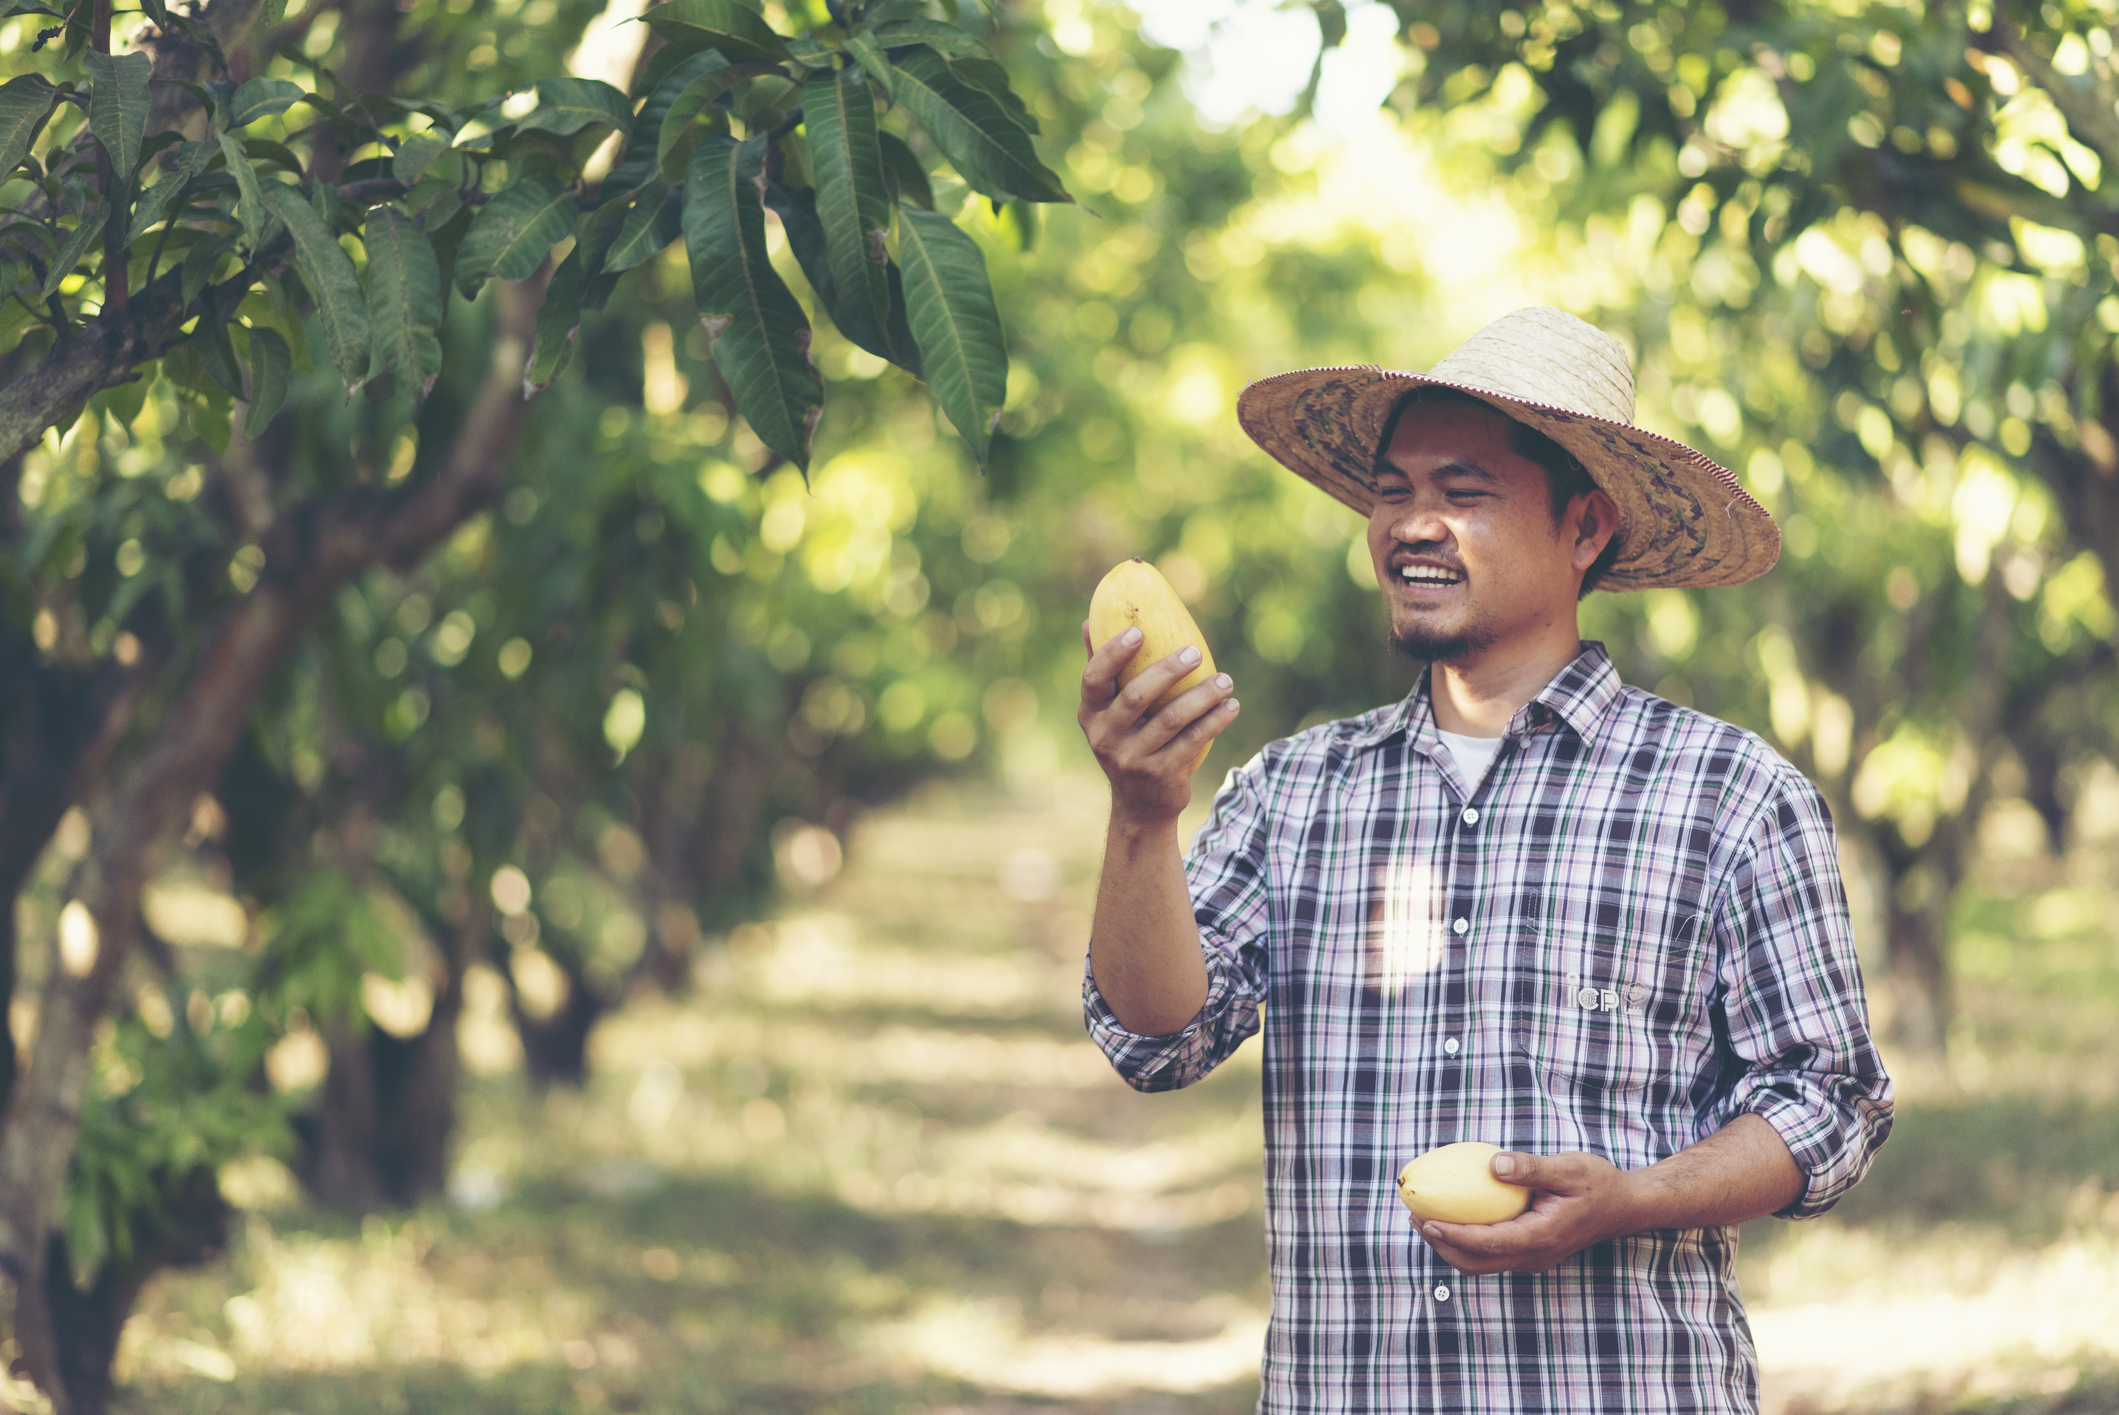 Young Asian Thai farmer picking mango fruit in organic farm